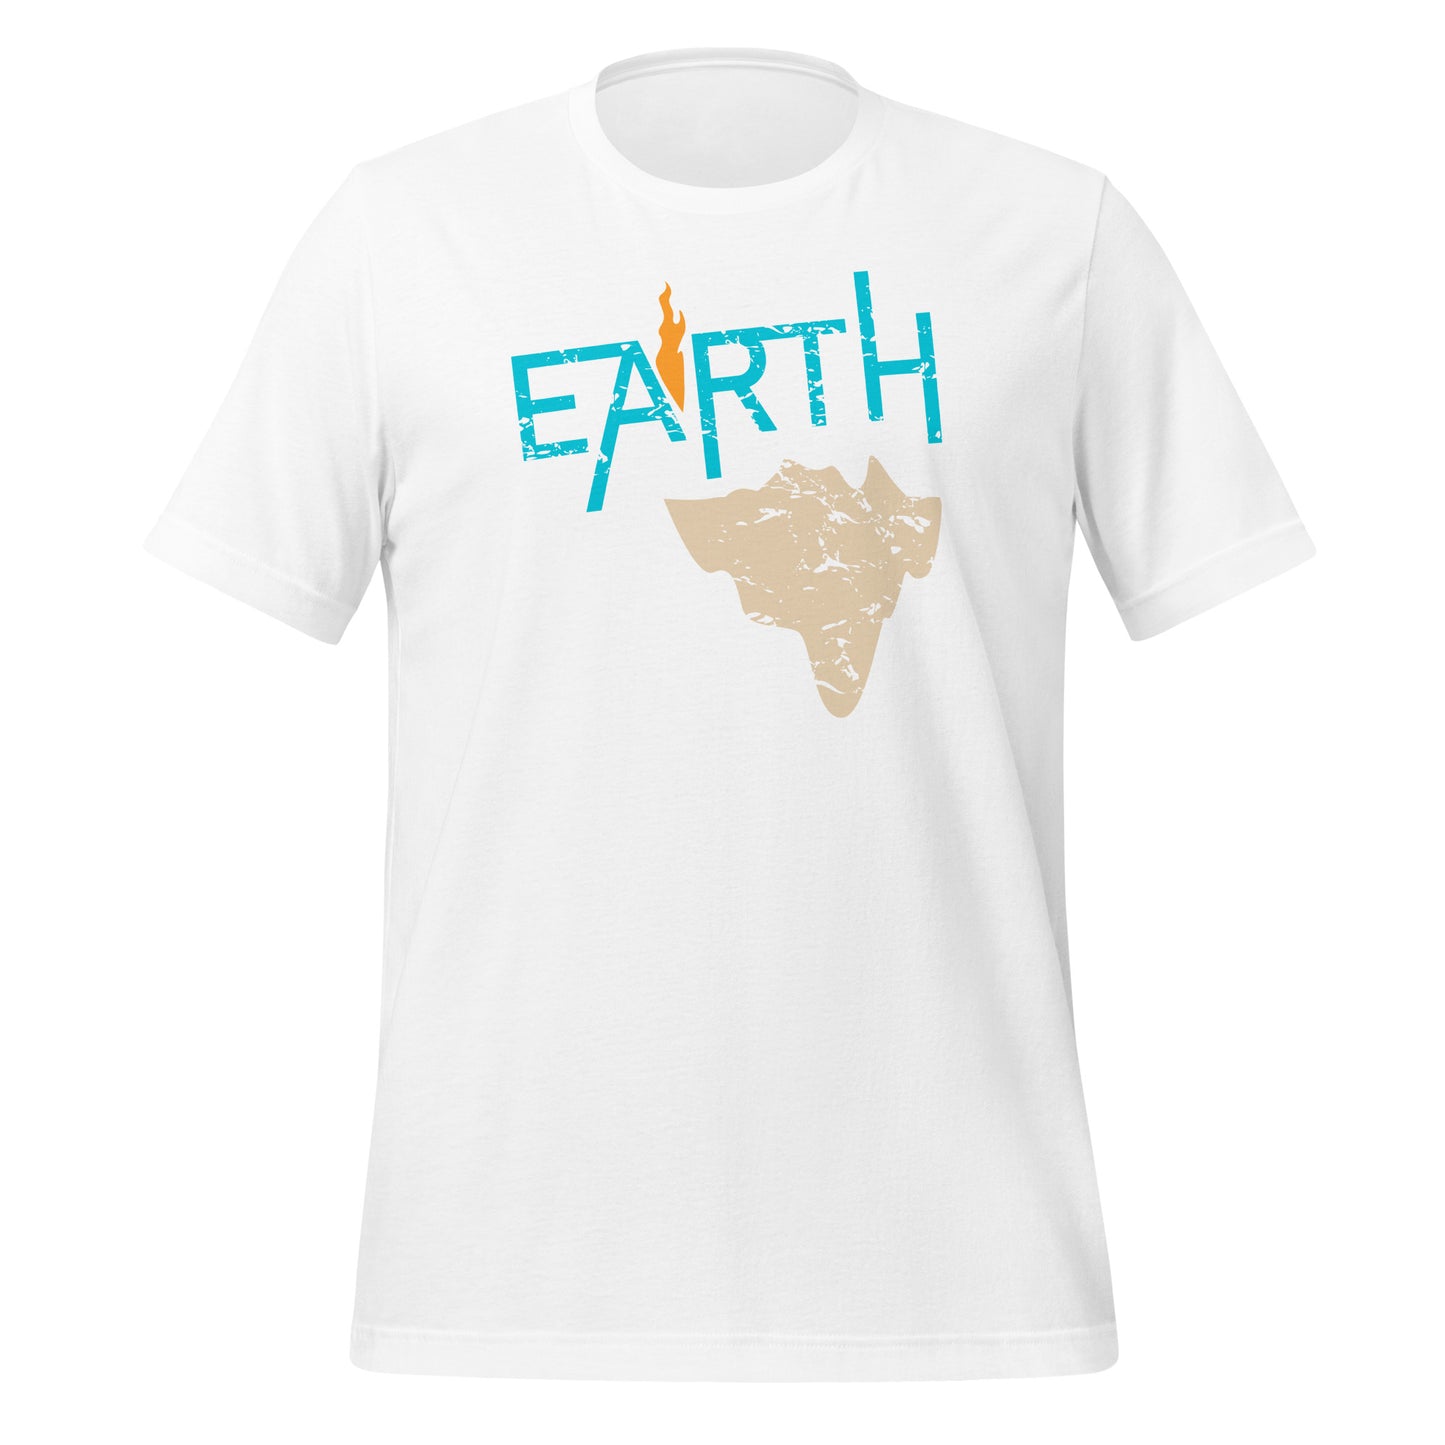 Save Earth: Eco-Friendly T-Shirt